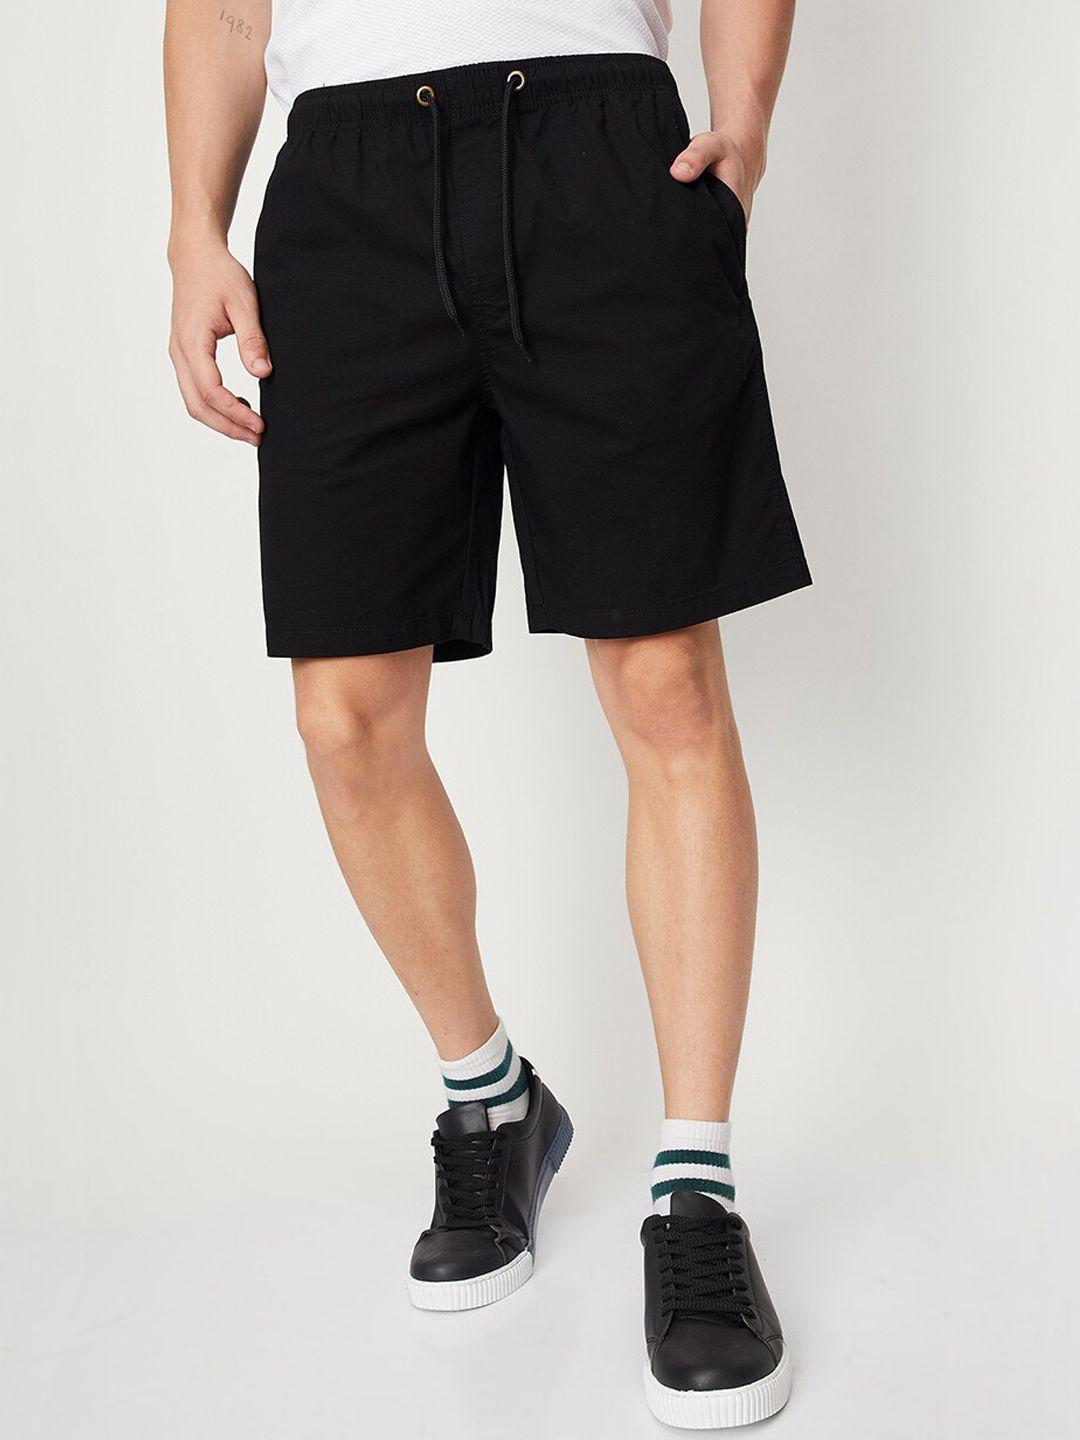 max-men-mid-rise-regular-shorts